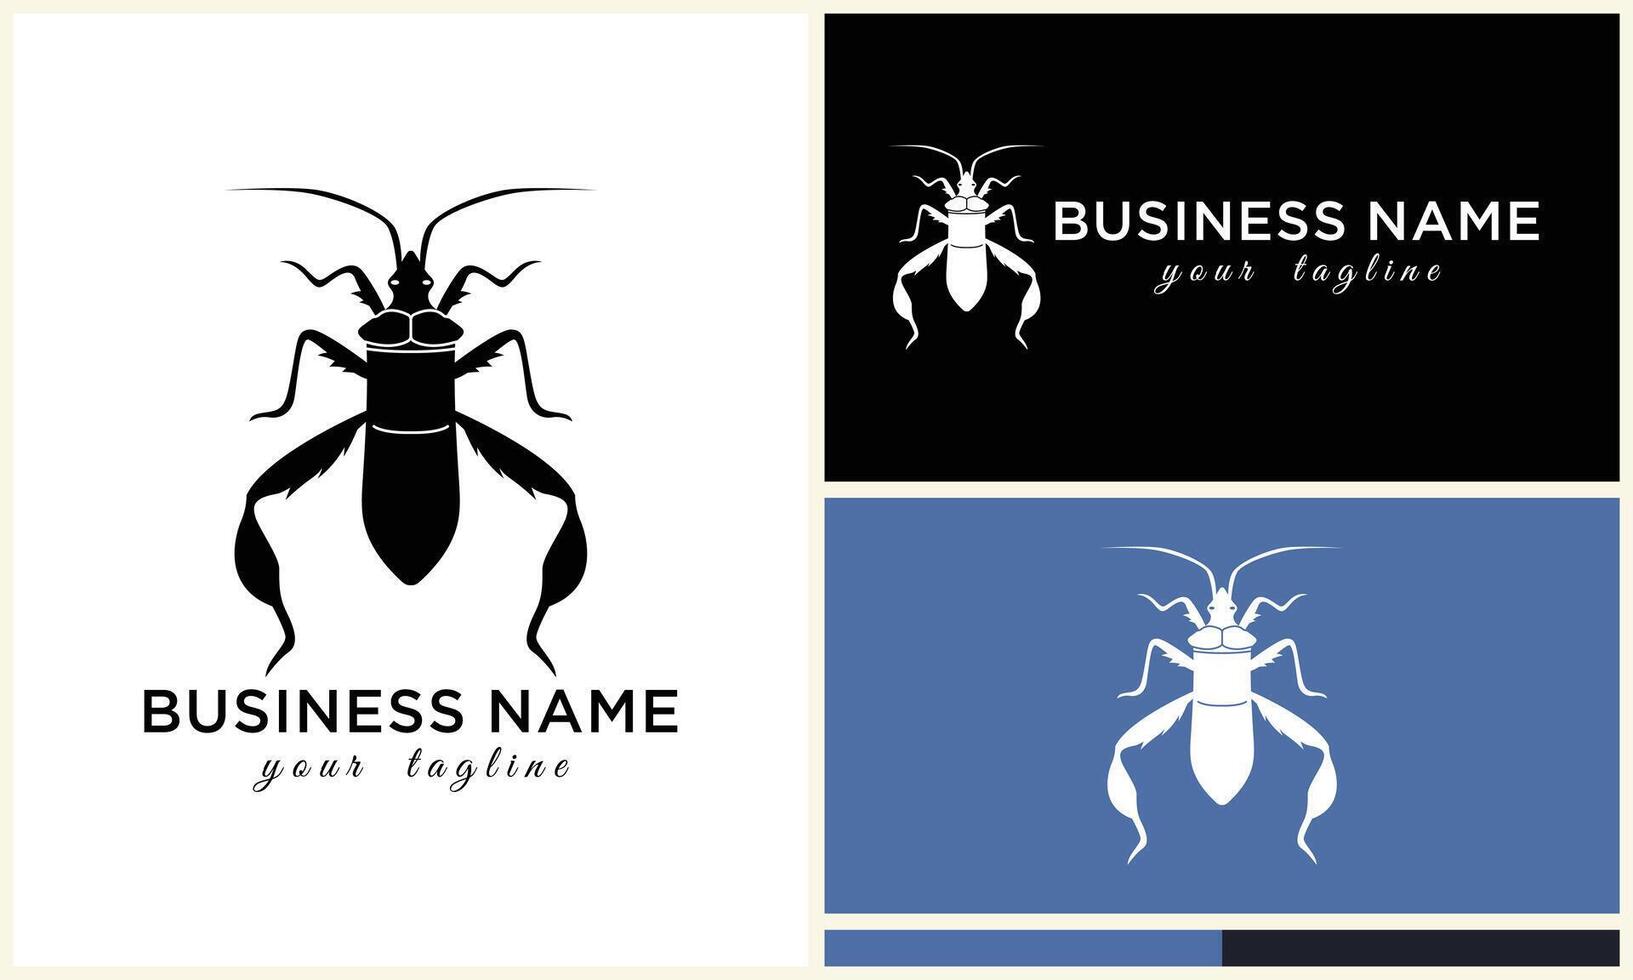 silhouette ladybug beetles logo template vector